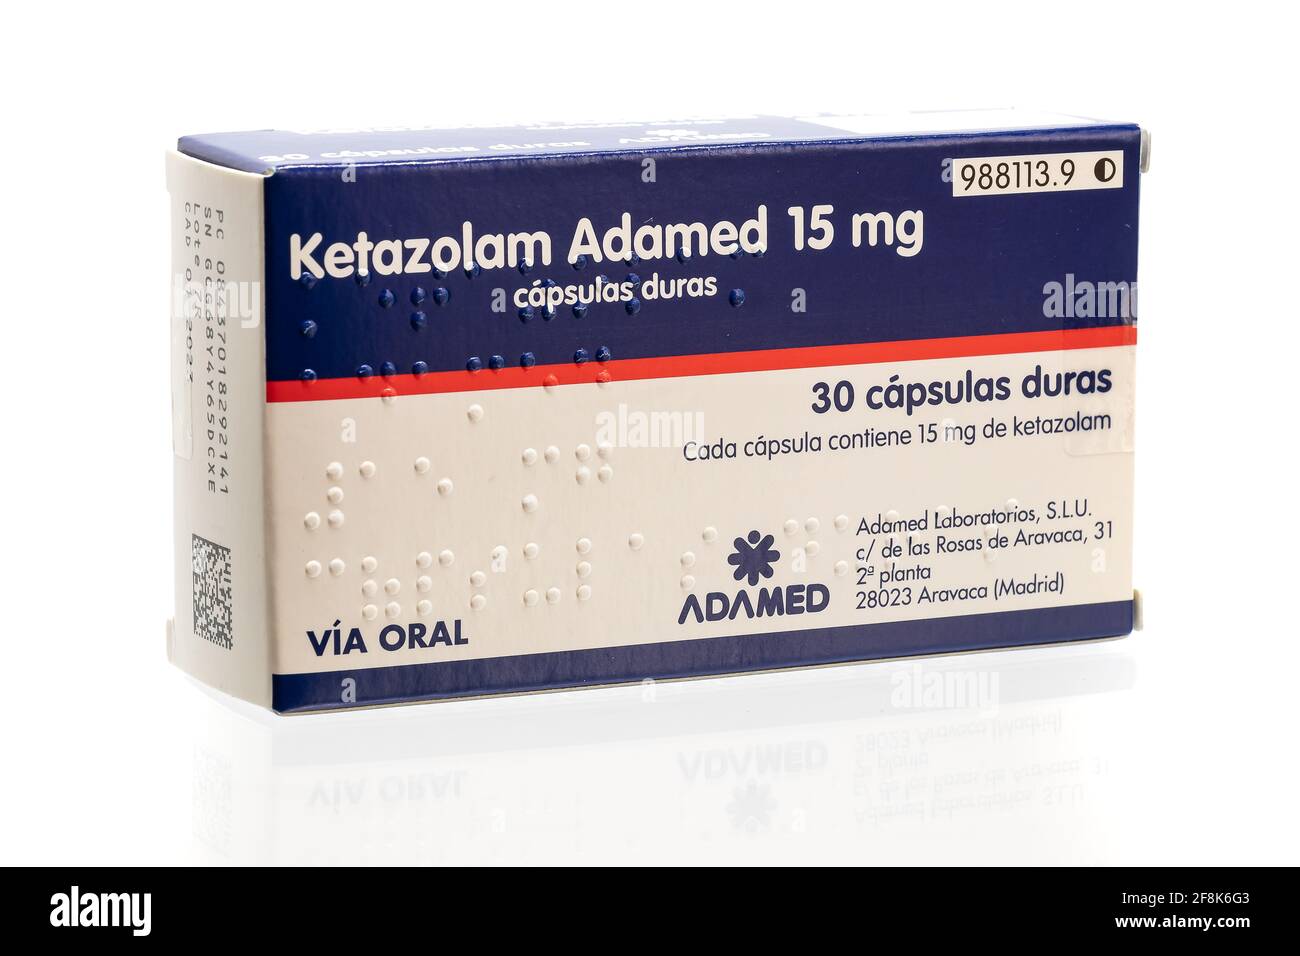 Huelva, Espagne - 14 avril 2021: Boîte espagnole de marque Ketazolam Adamed. Dérivé de benzodiazépine de médicament. Il possède anxiolytique, anticonvulsant, sedati Banque D'Images